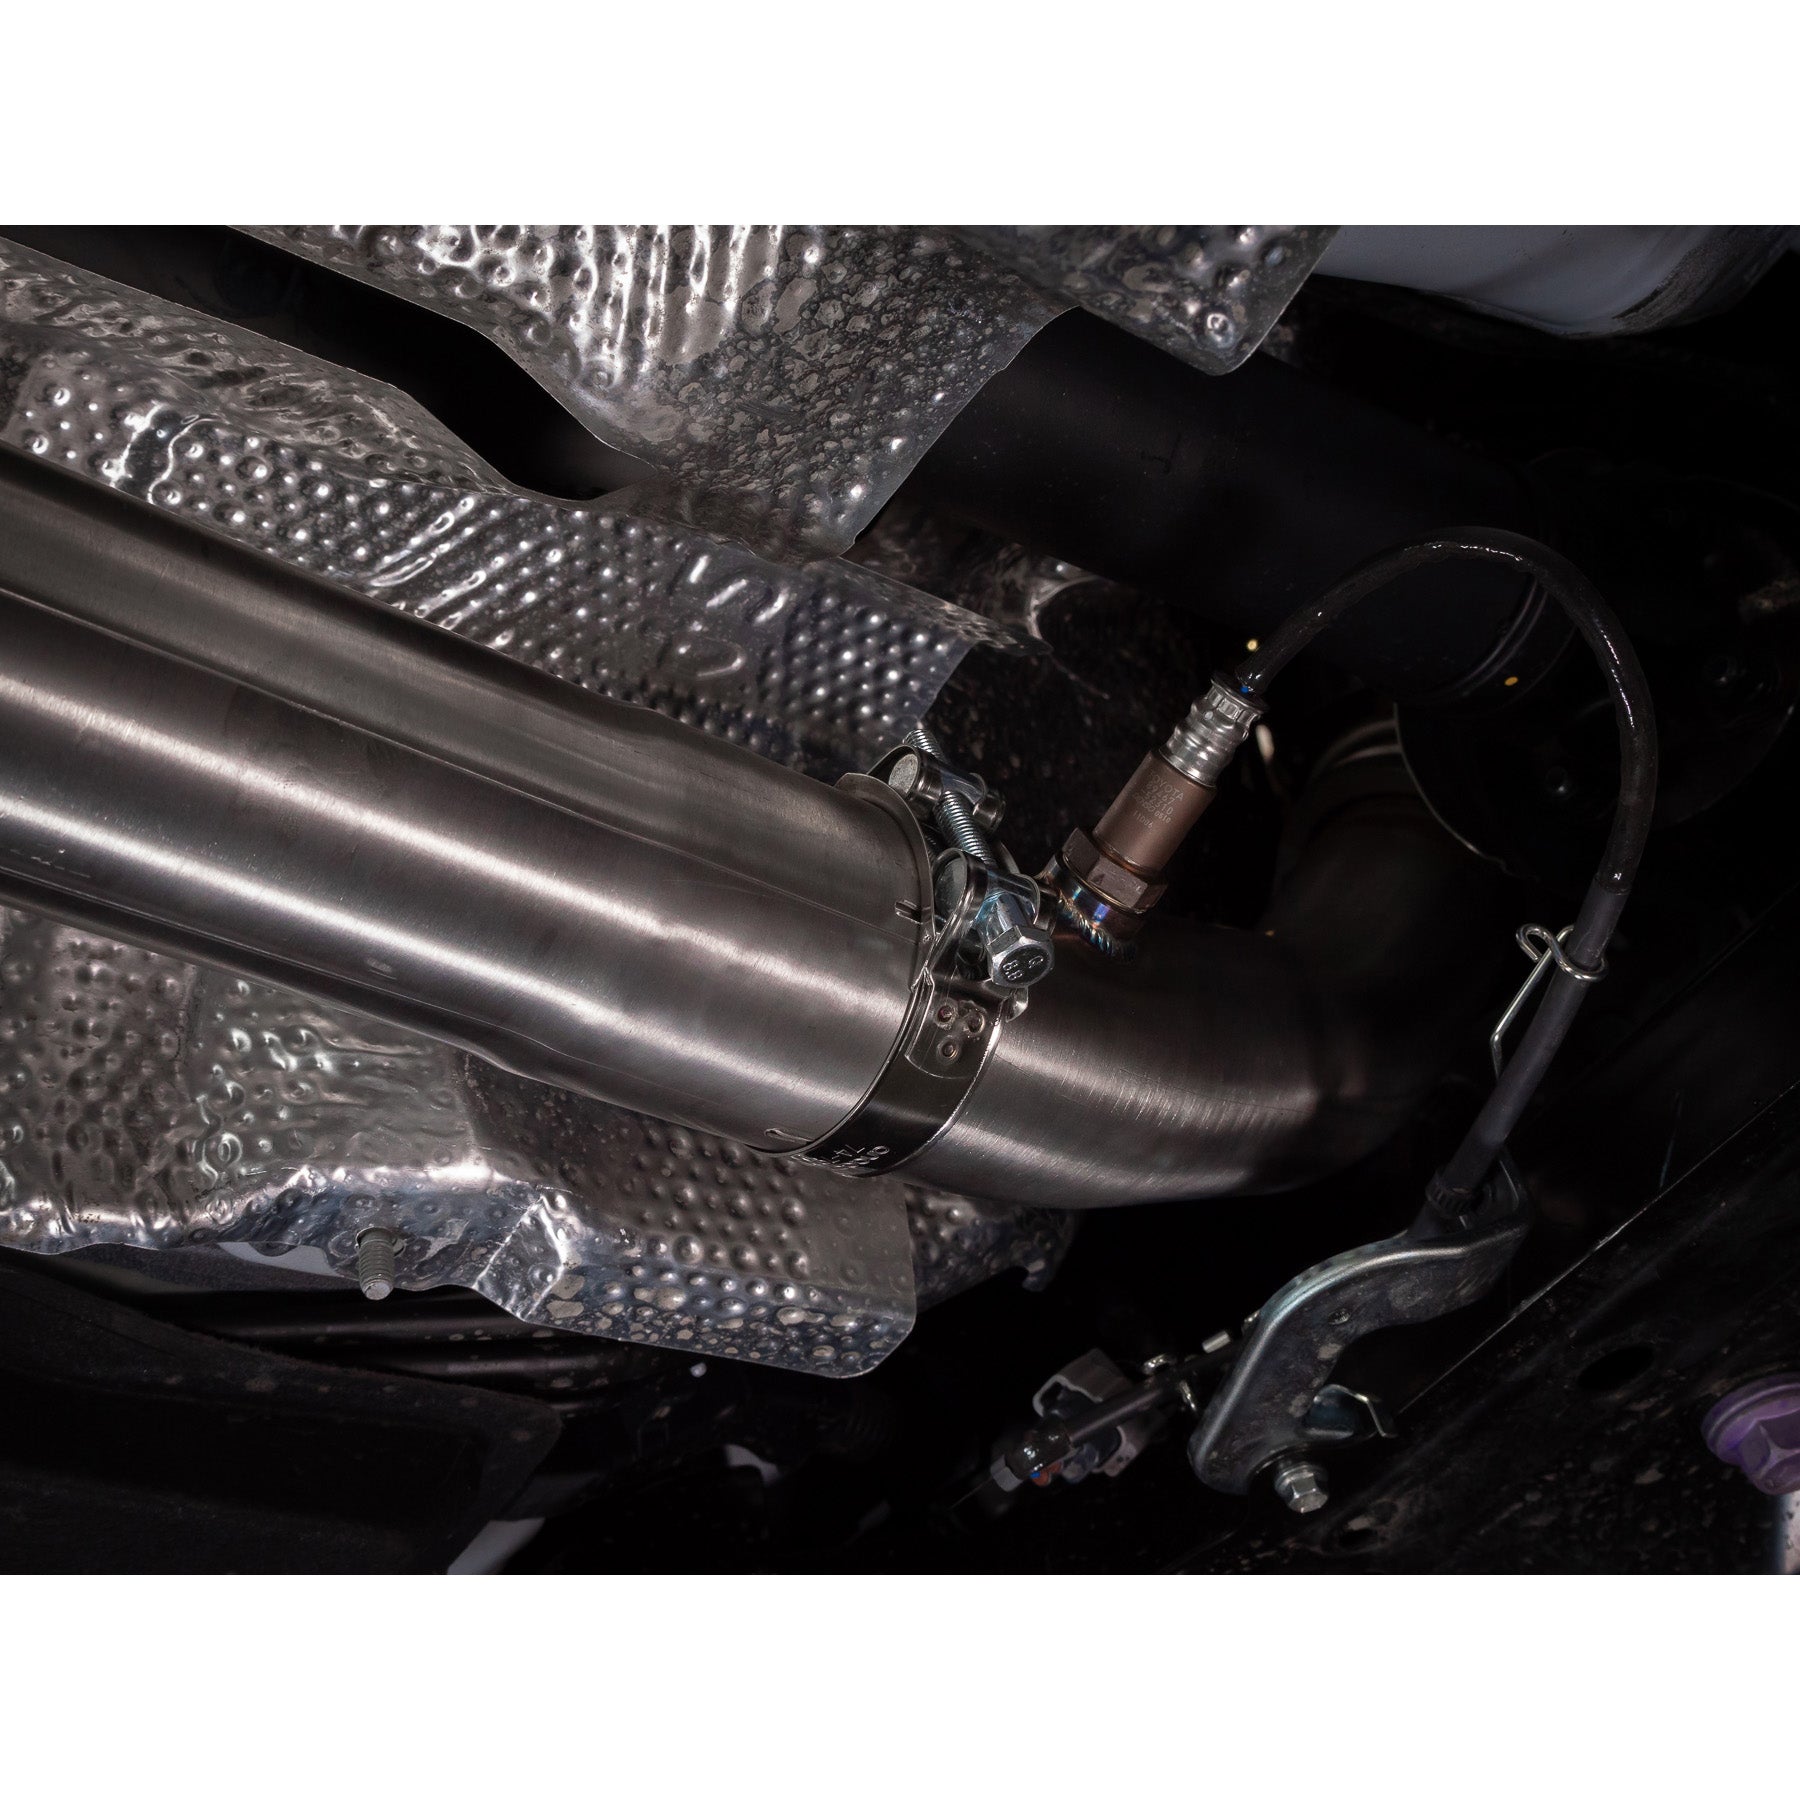 Toyota GR Yaris 1.6 Front Downpipe Sports Cat / De-Cat (incl GPF Delete) Performance Exhaust